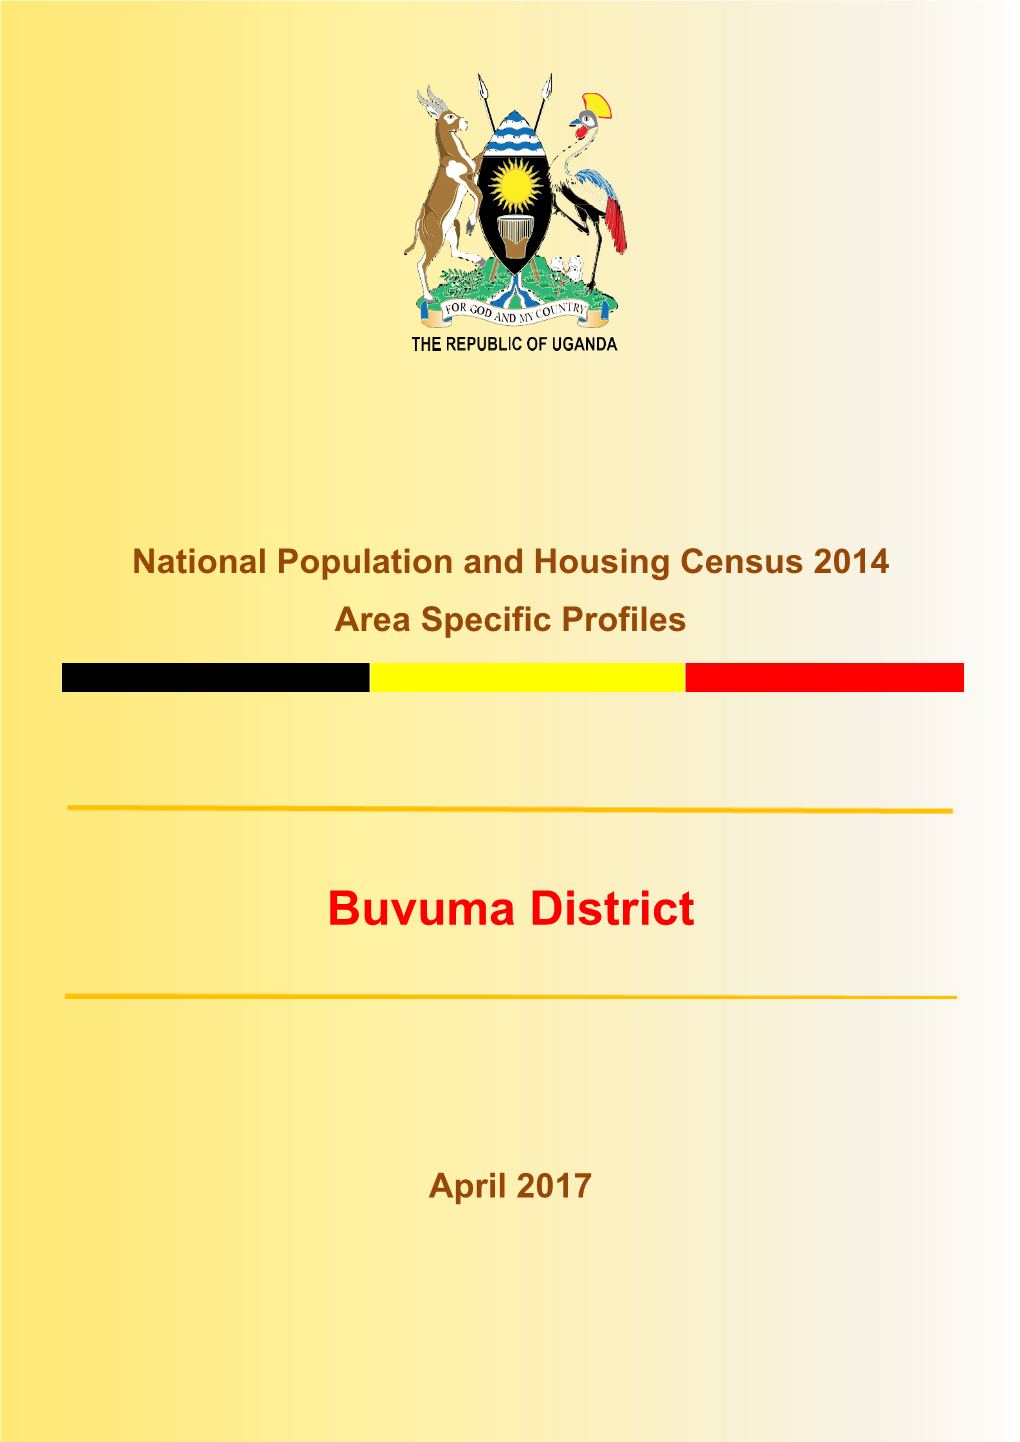 Buvuma District